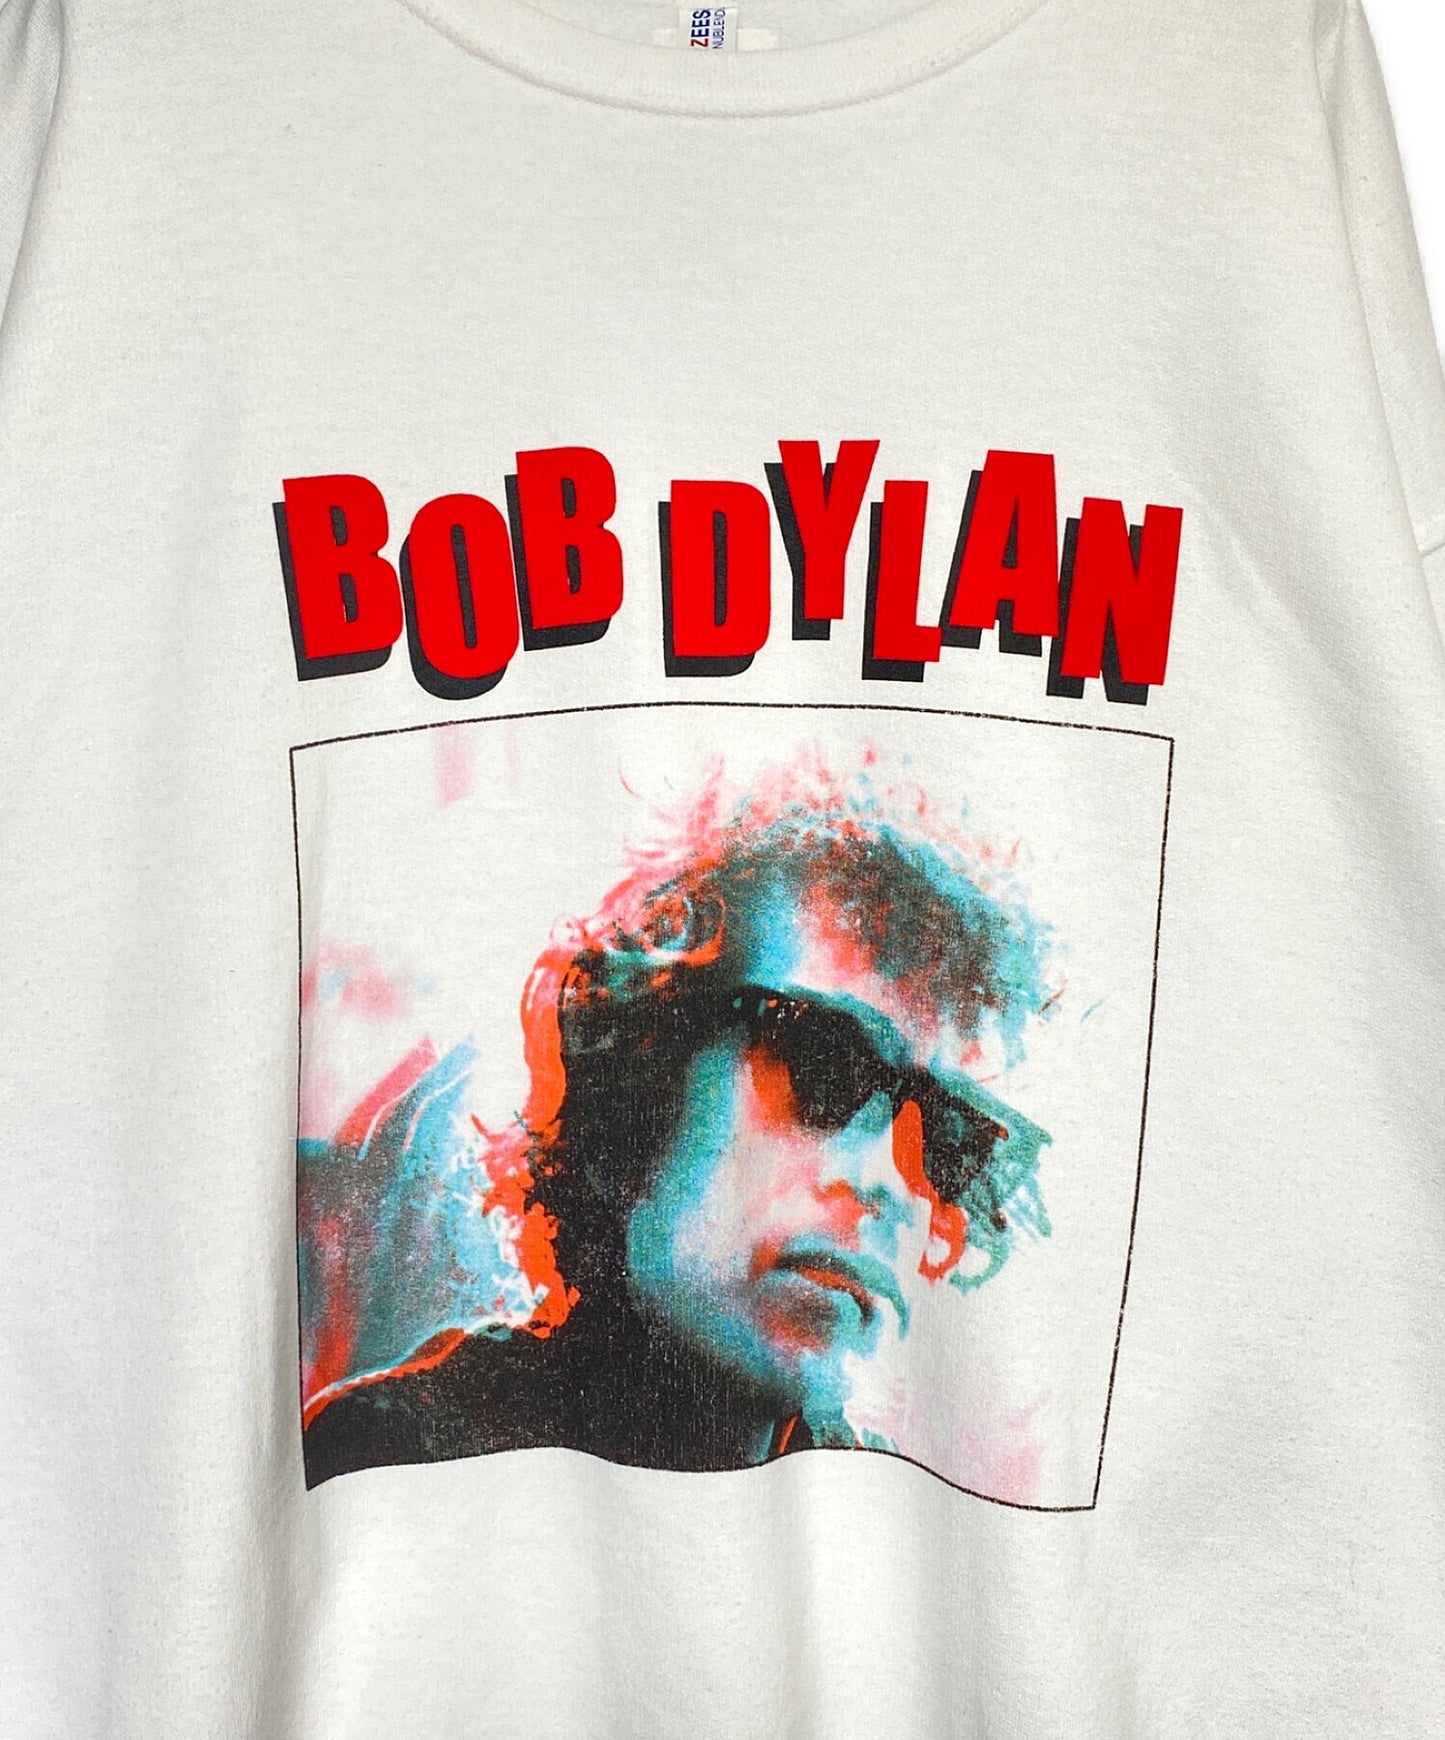 Wacko Maria Bob Dylan / Sweat Shirt (เสื้อกันเหงื่อ Bob Dylan)